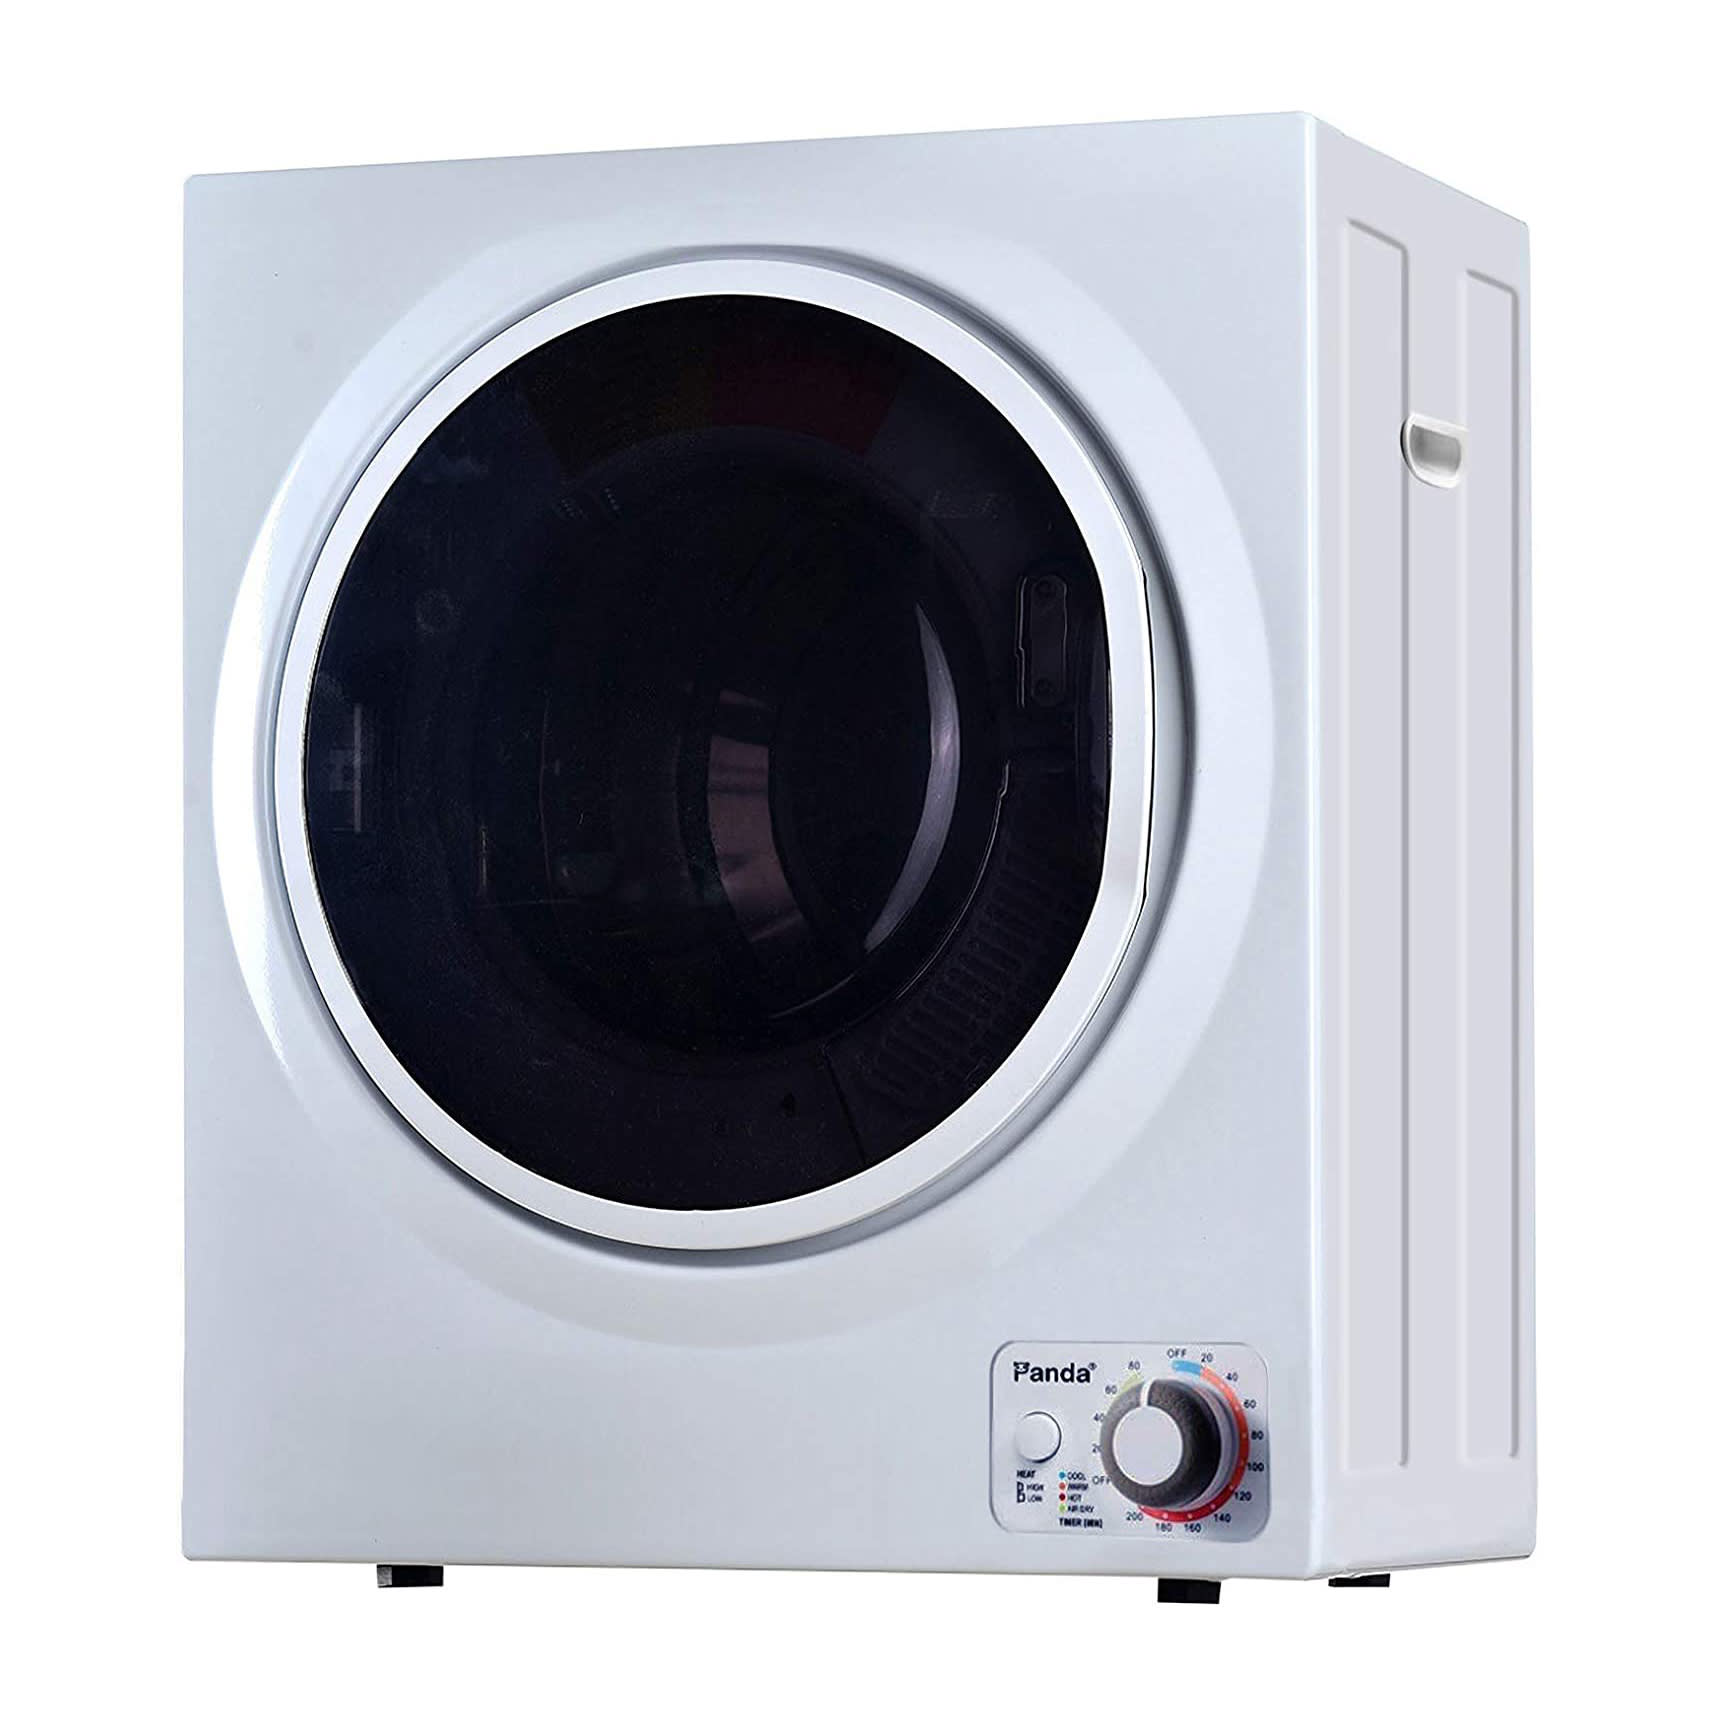 Portable Mini Clothes Dryer, Travel Size Dryer, Suitable For